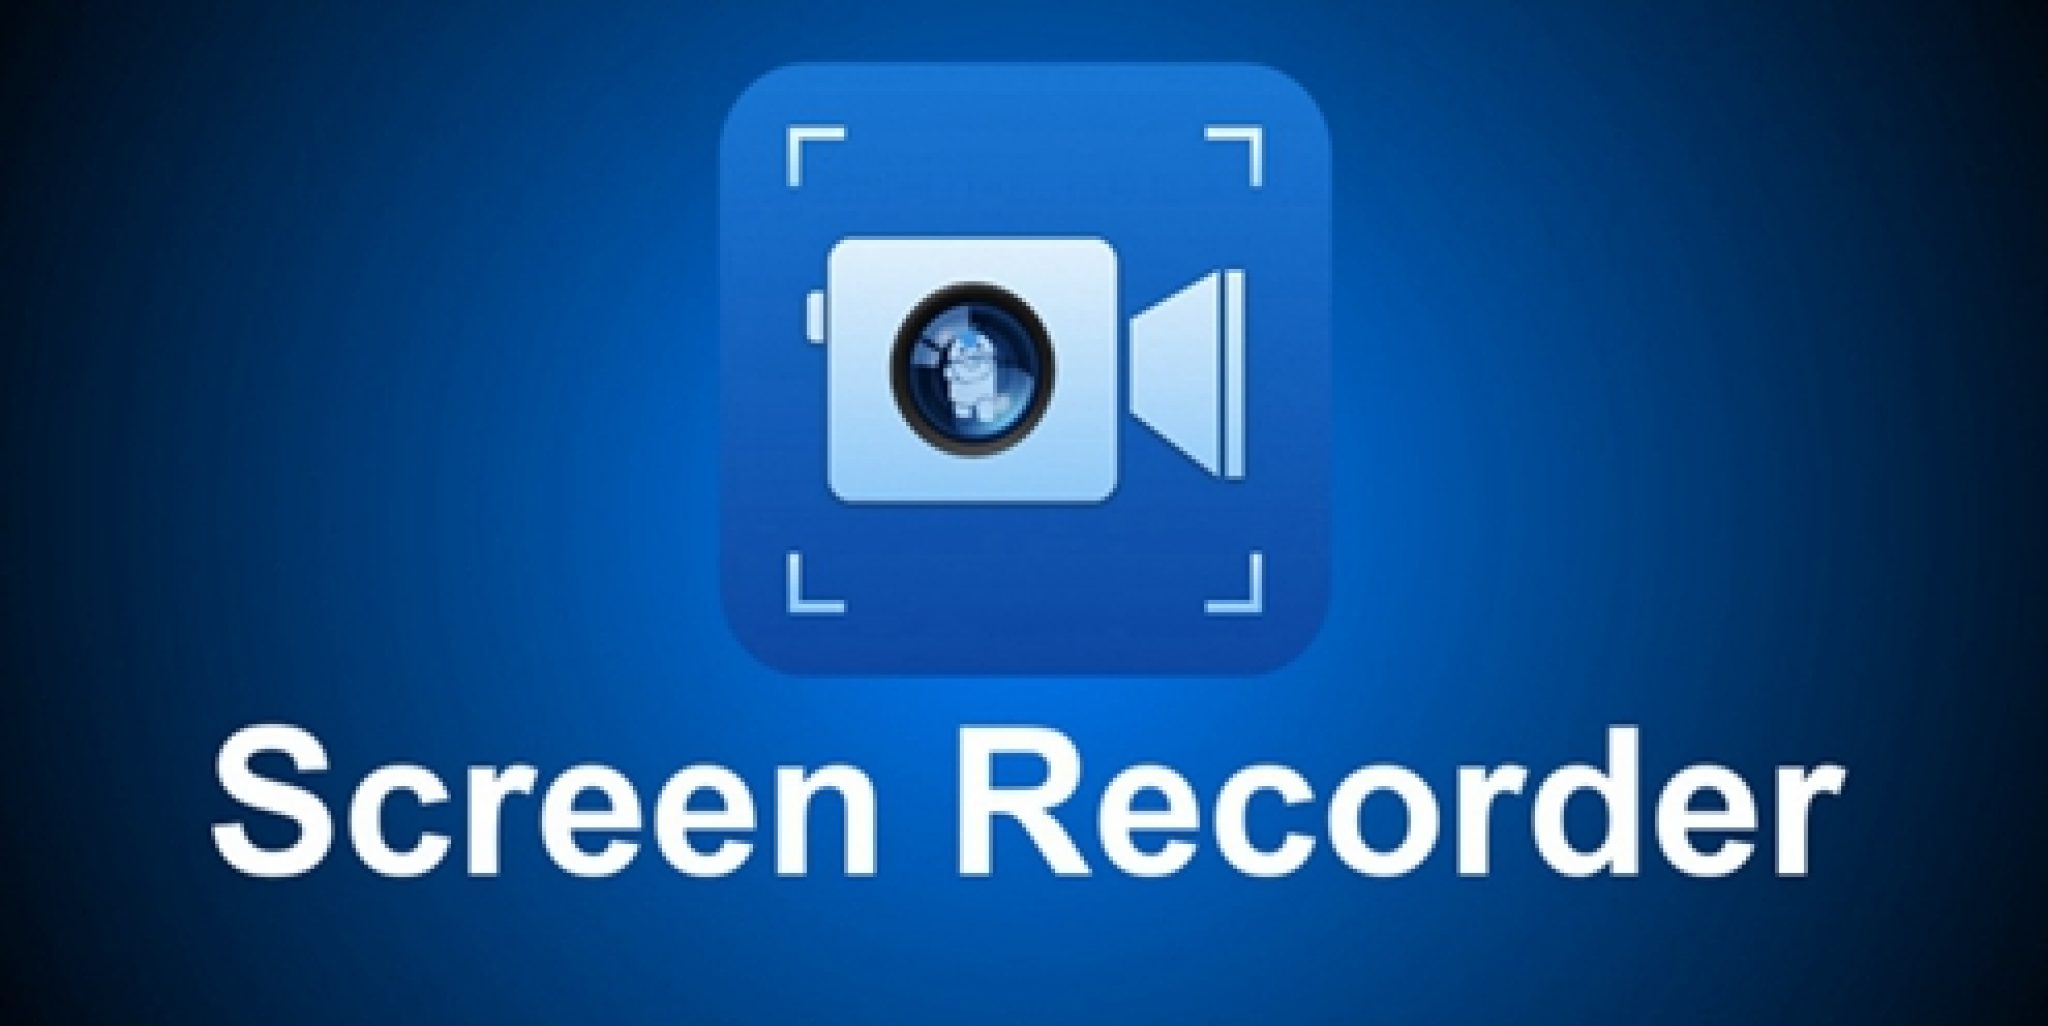 screen recorder download free windows 10